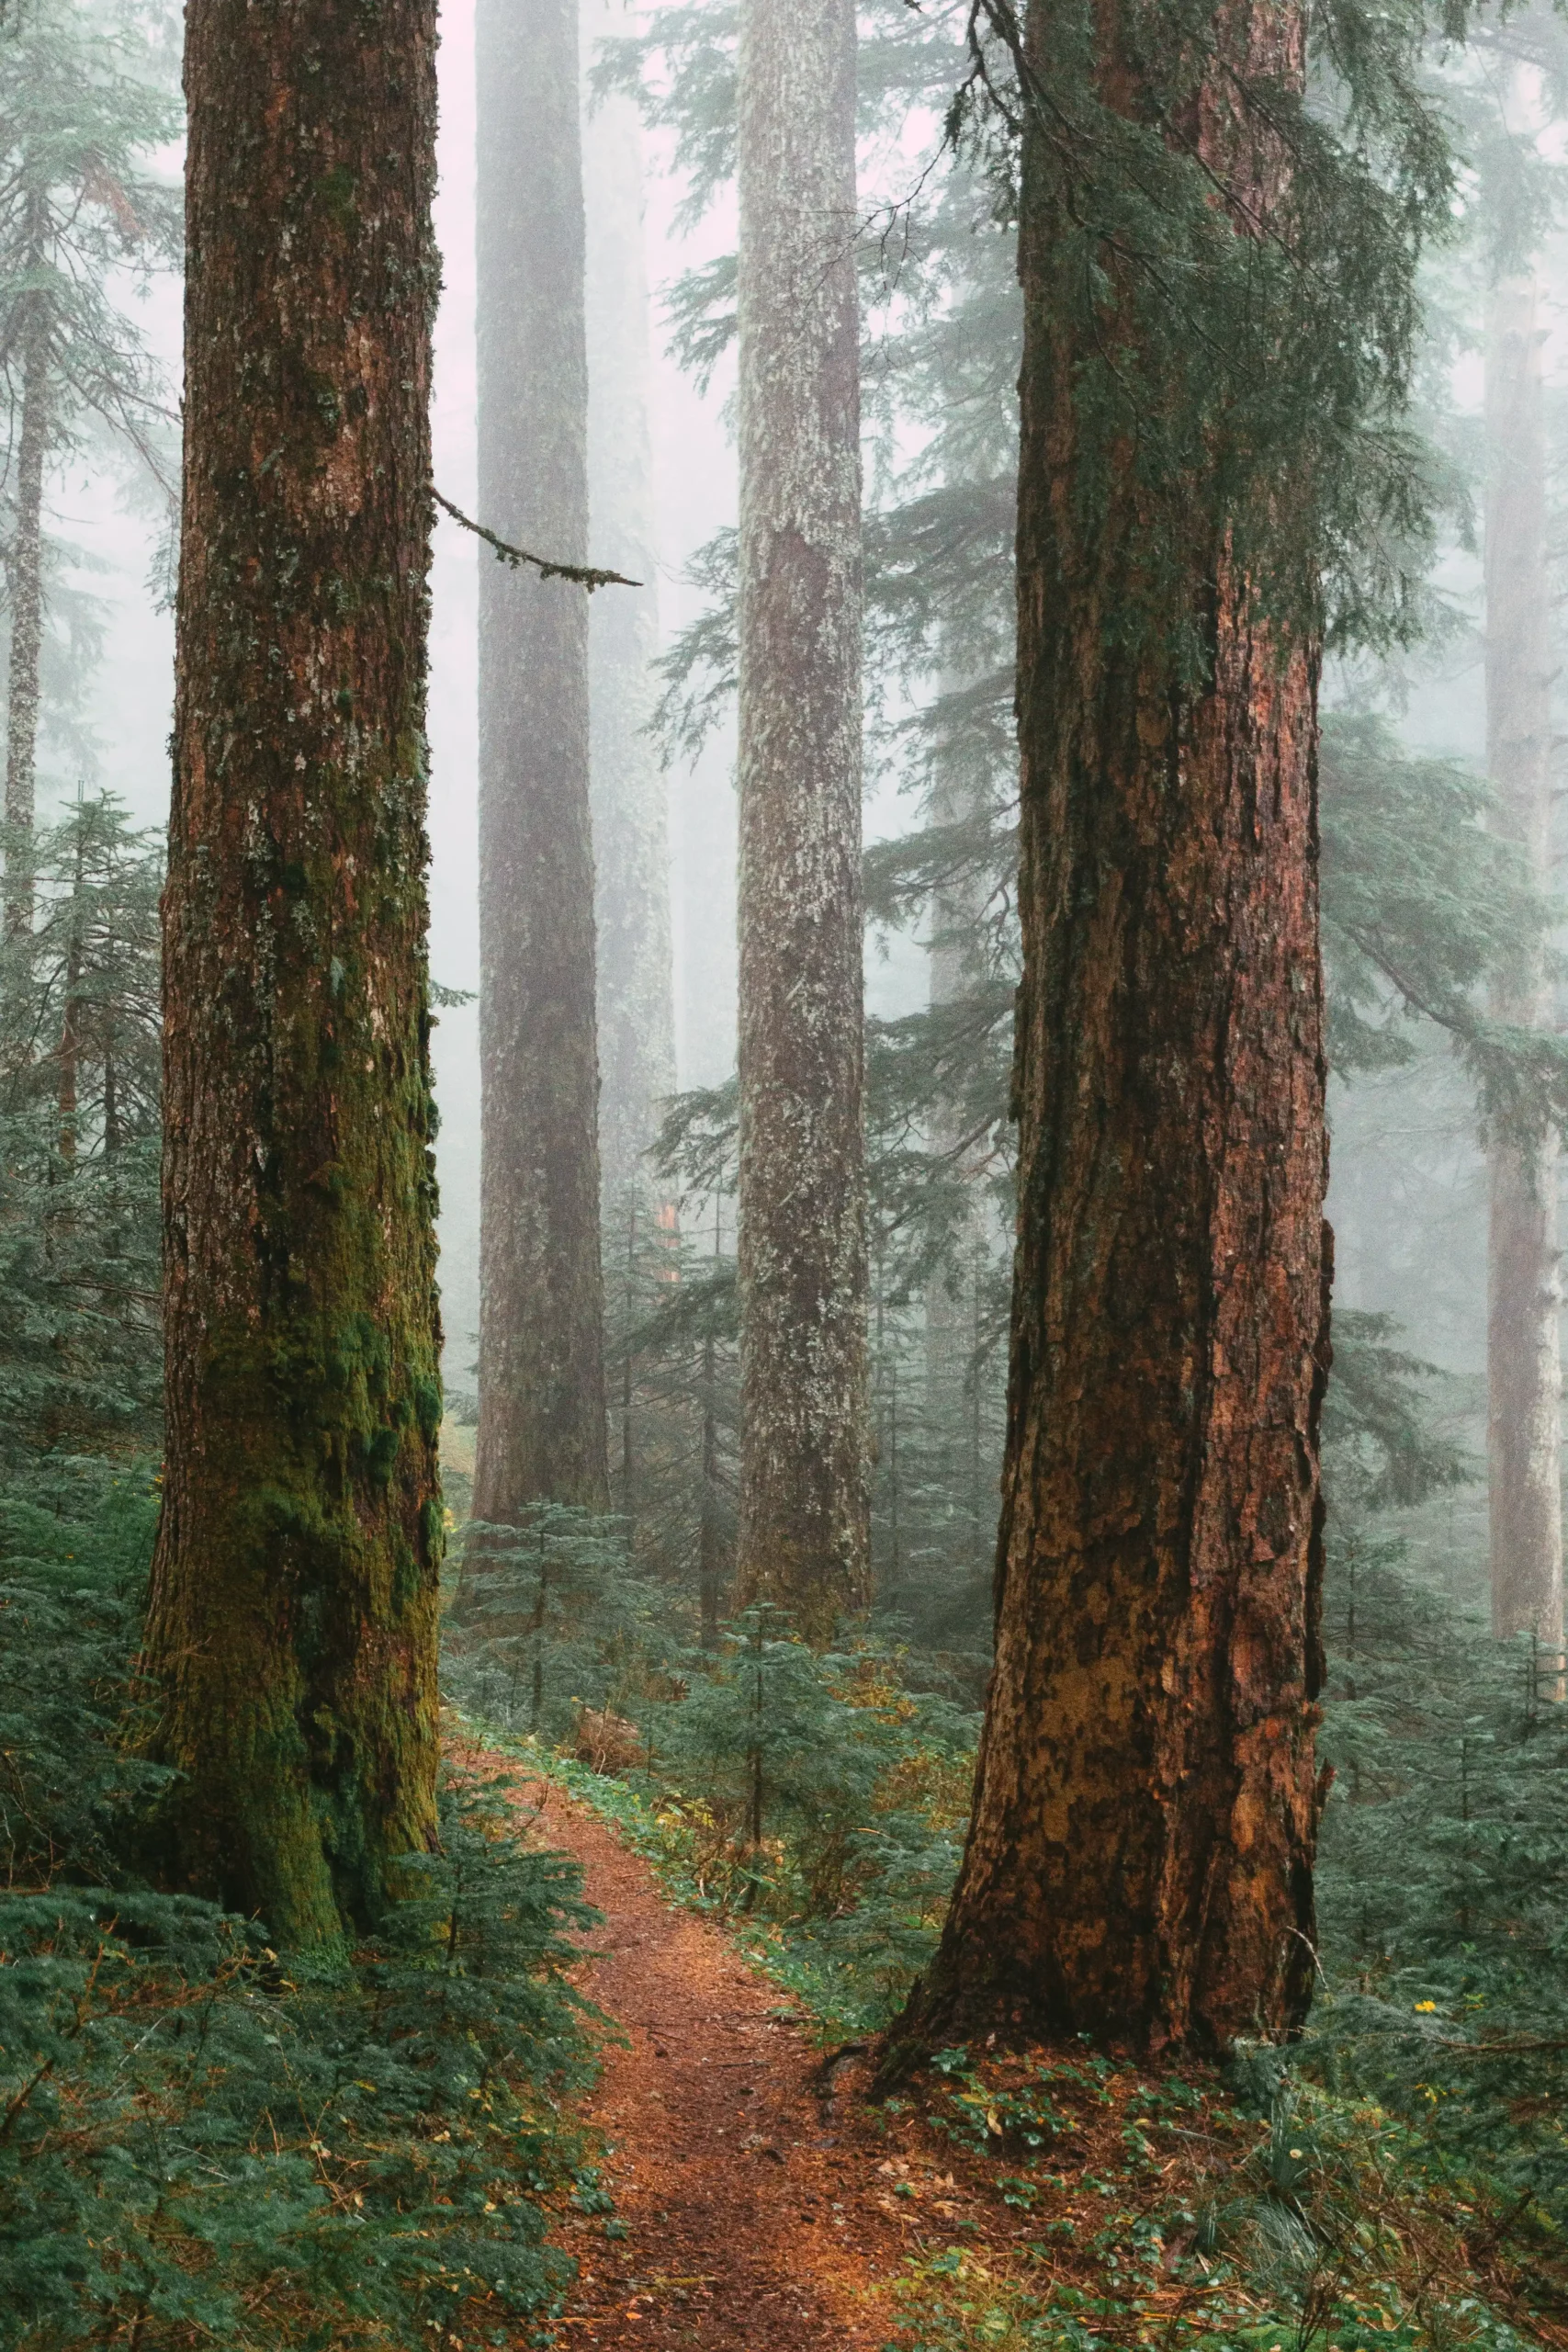 Oregon's high trees